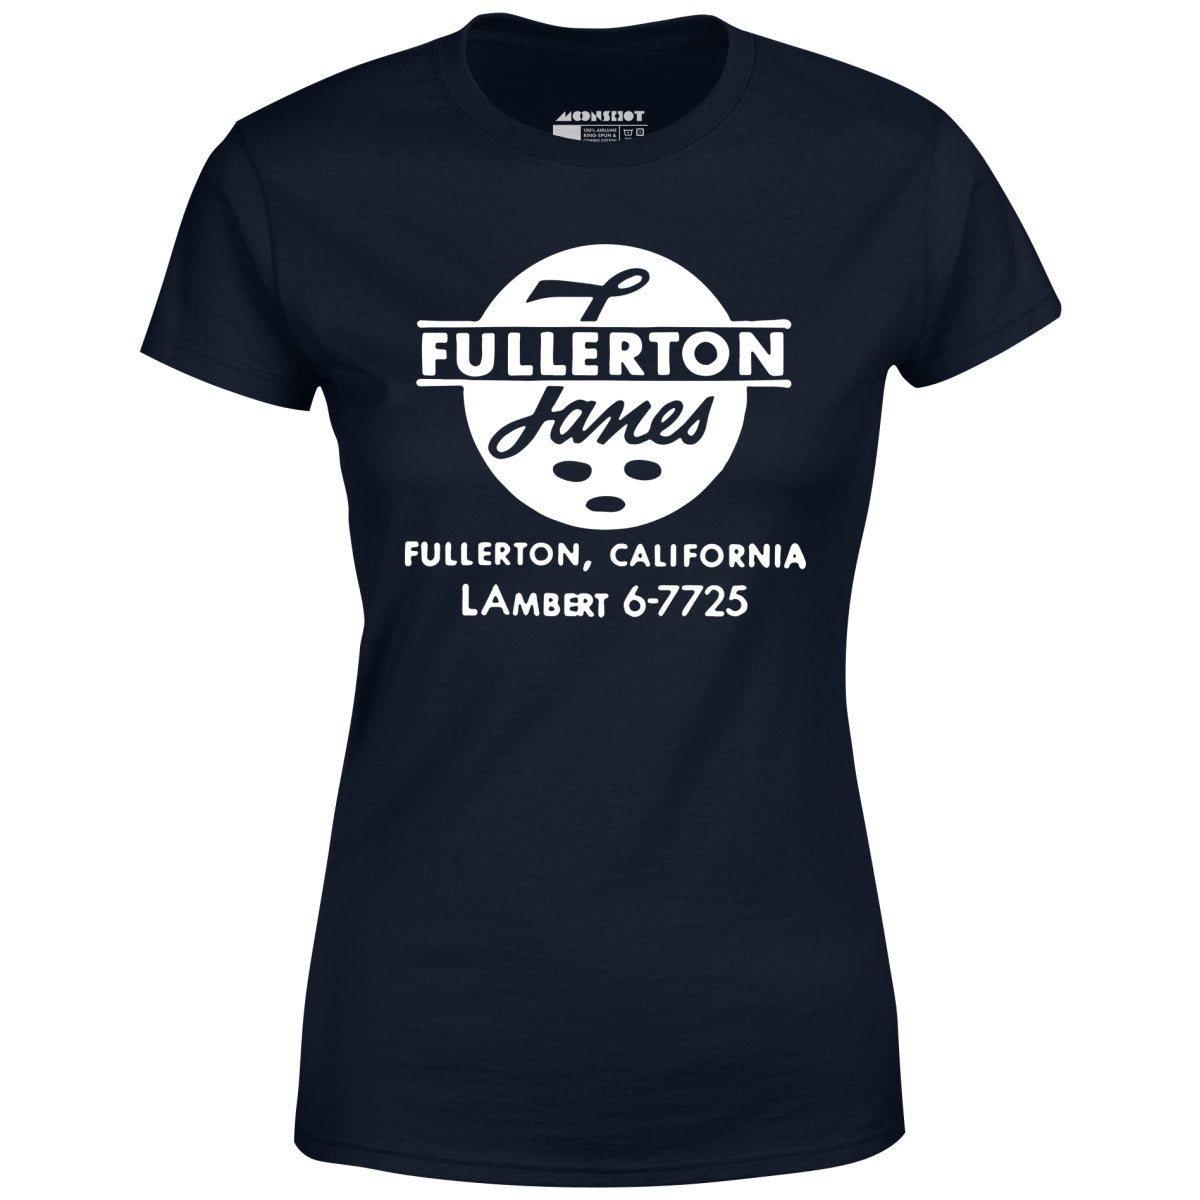 Fullerton Lanes - Fullerton, CA - Vintage Bowling Alley - Women's T-Shirt